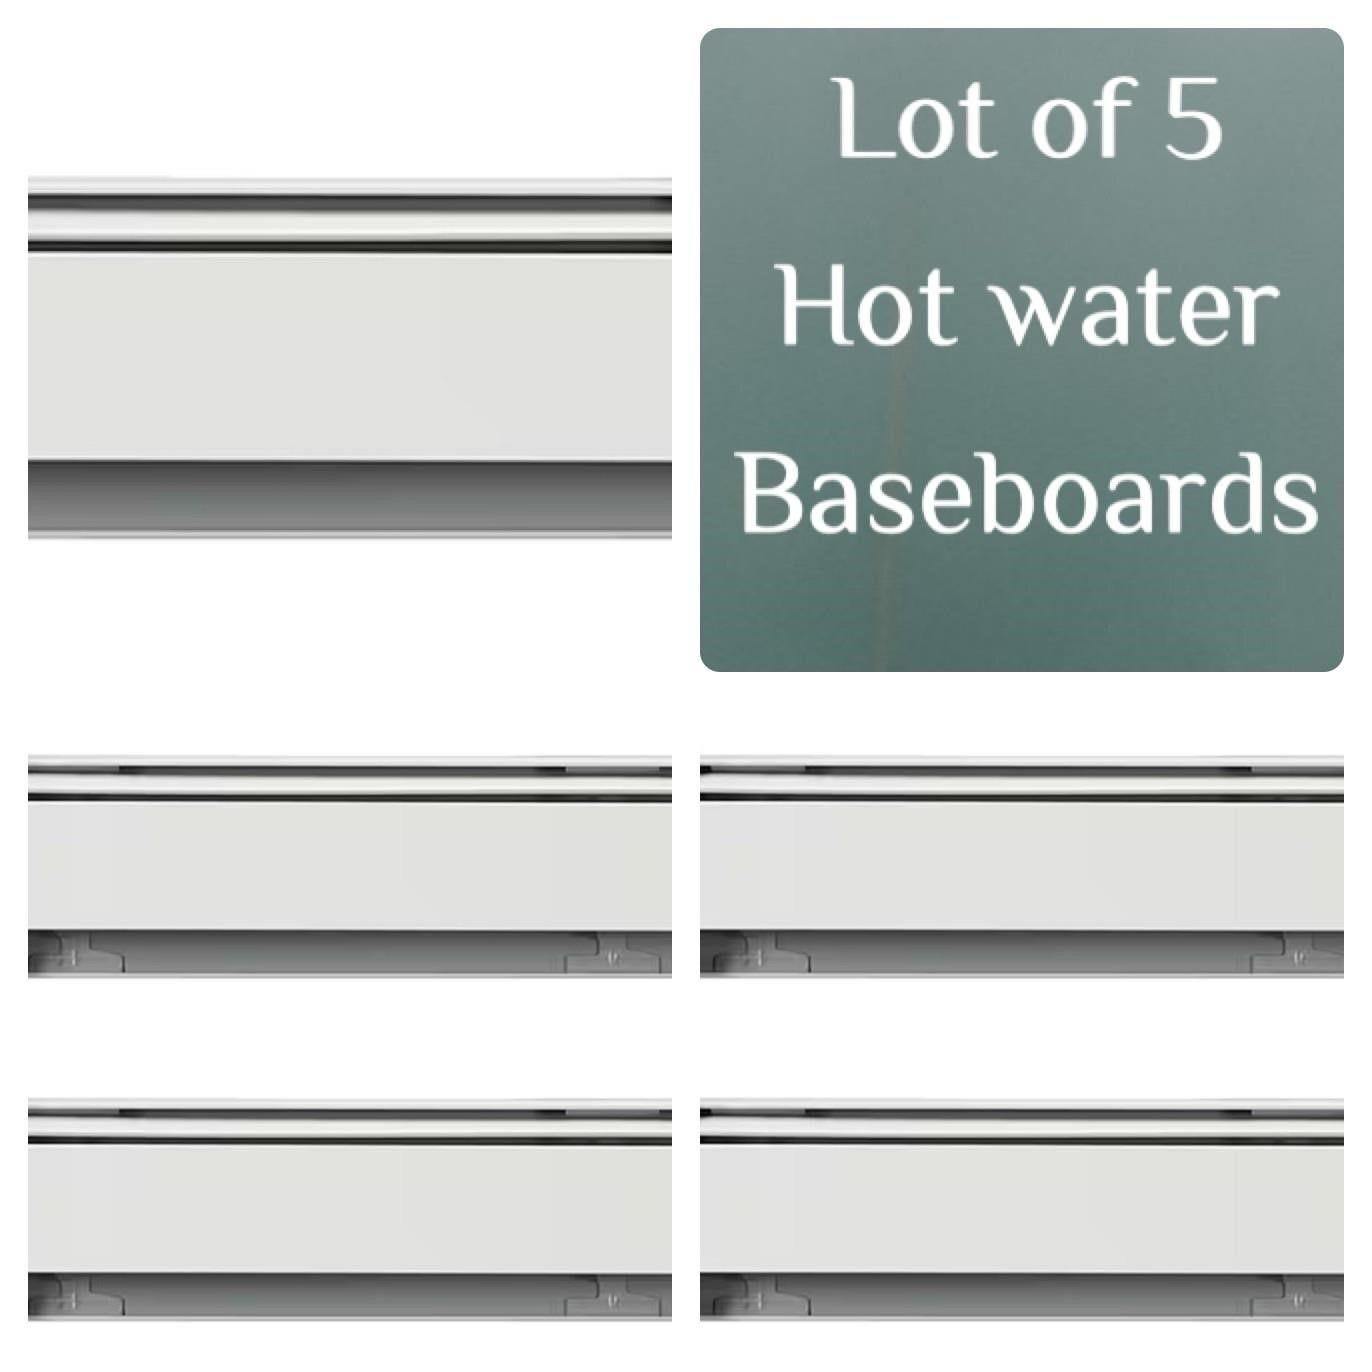 Lot of 5 - Hot Water Baseboard